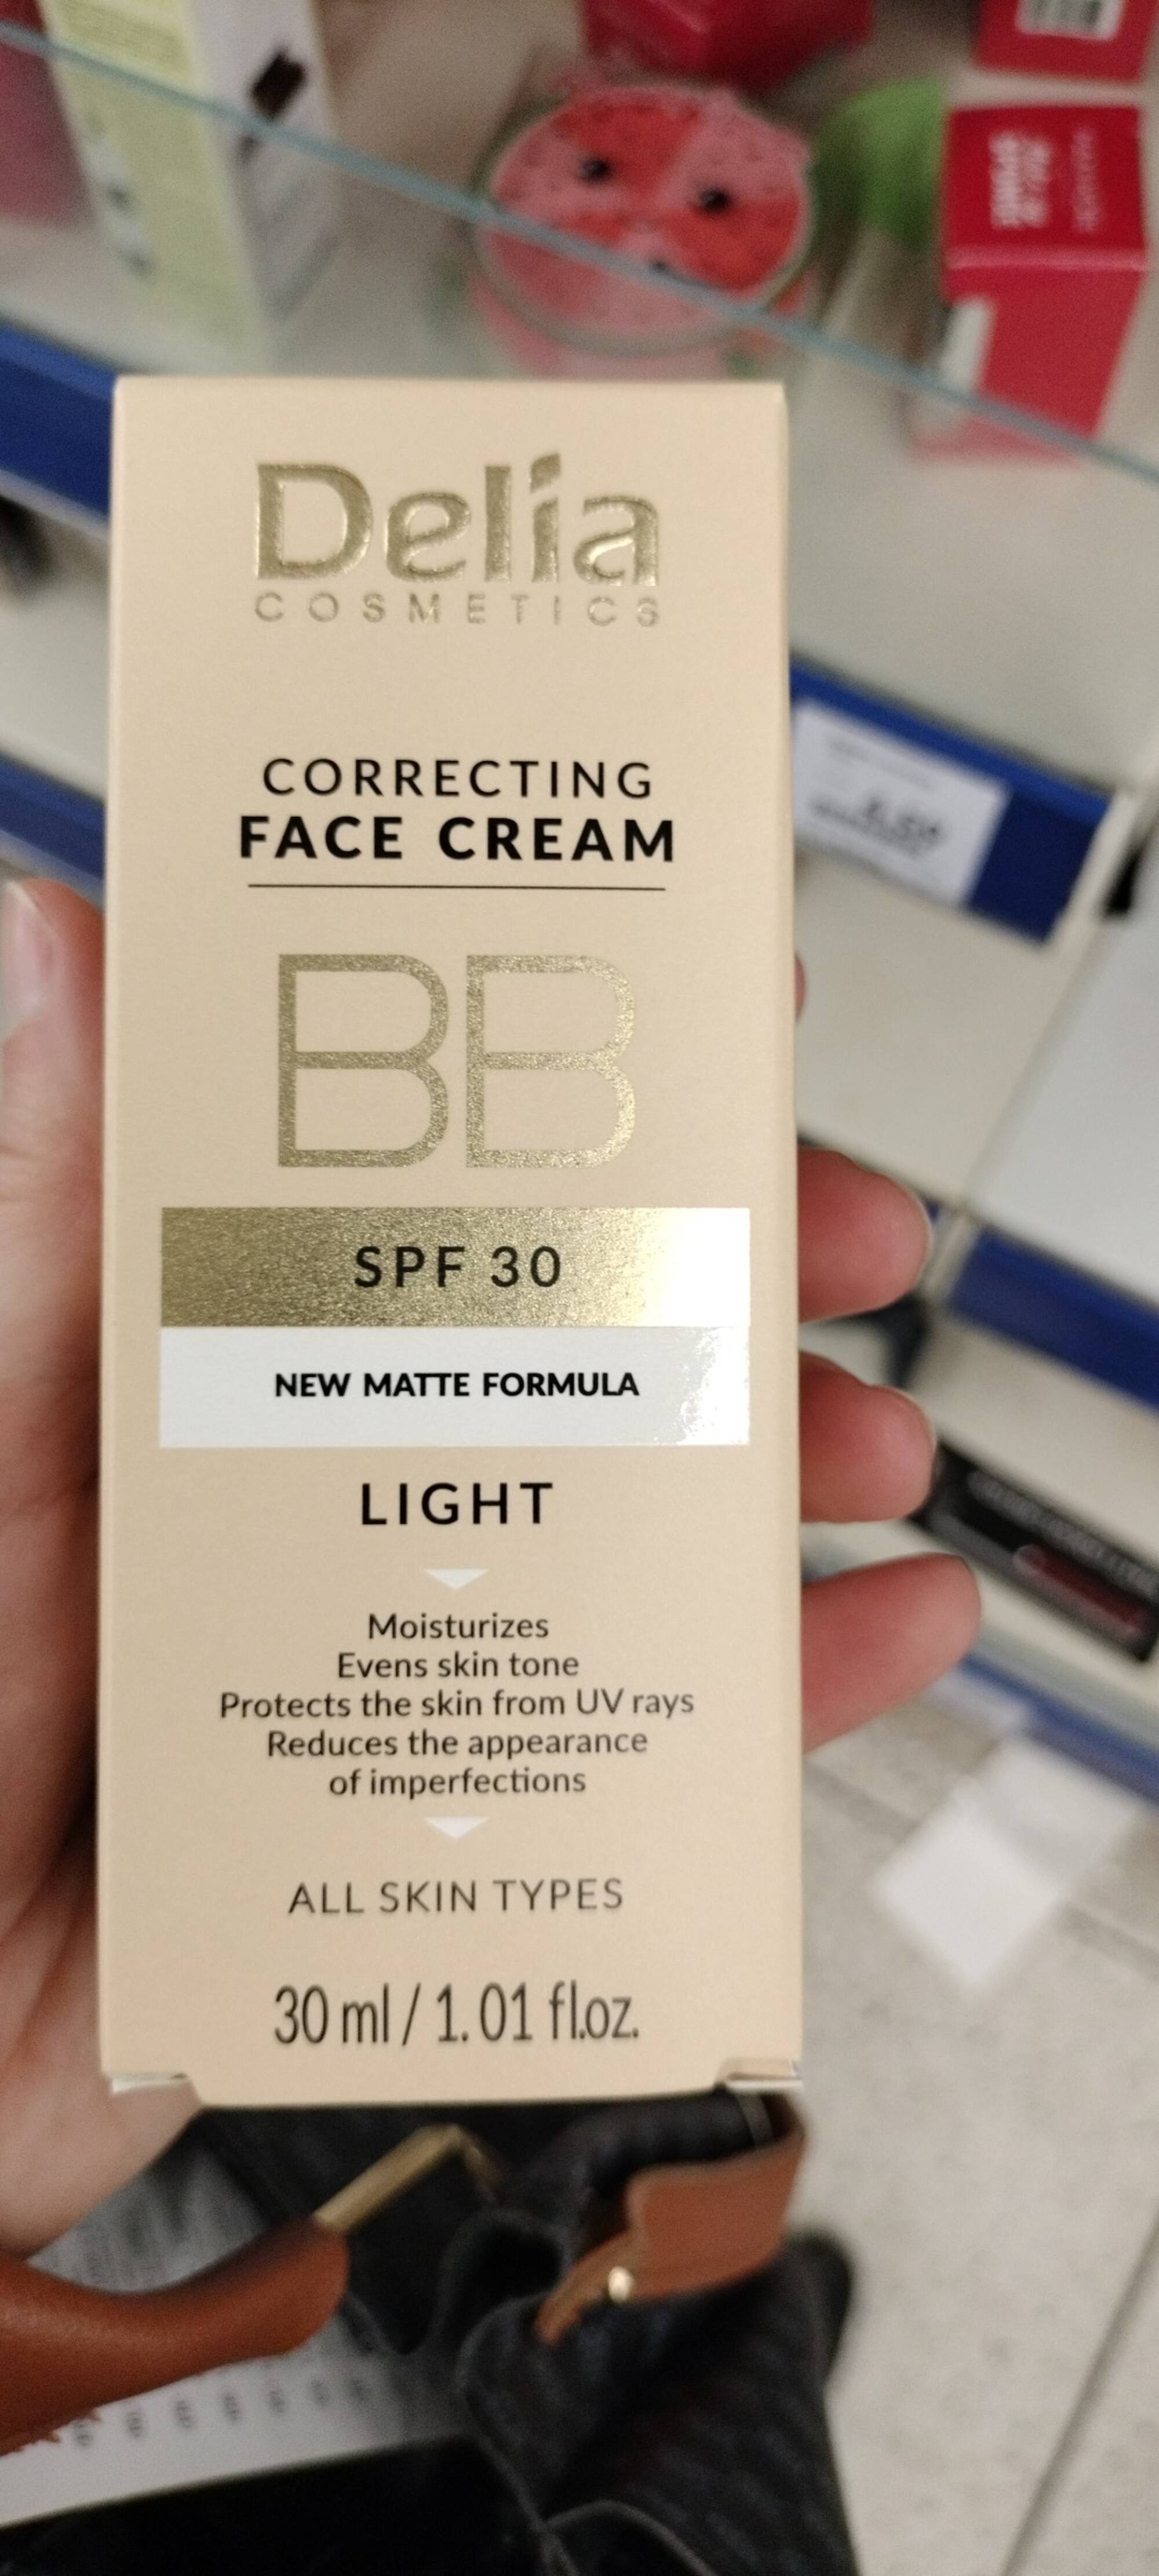 DELIA COSMETICS - Correcting face cream BB SPF 30 light